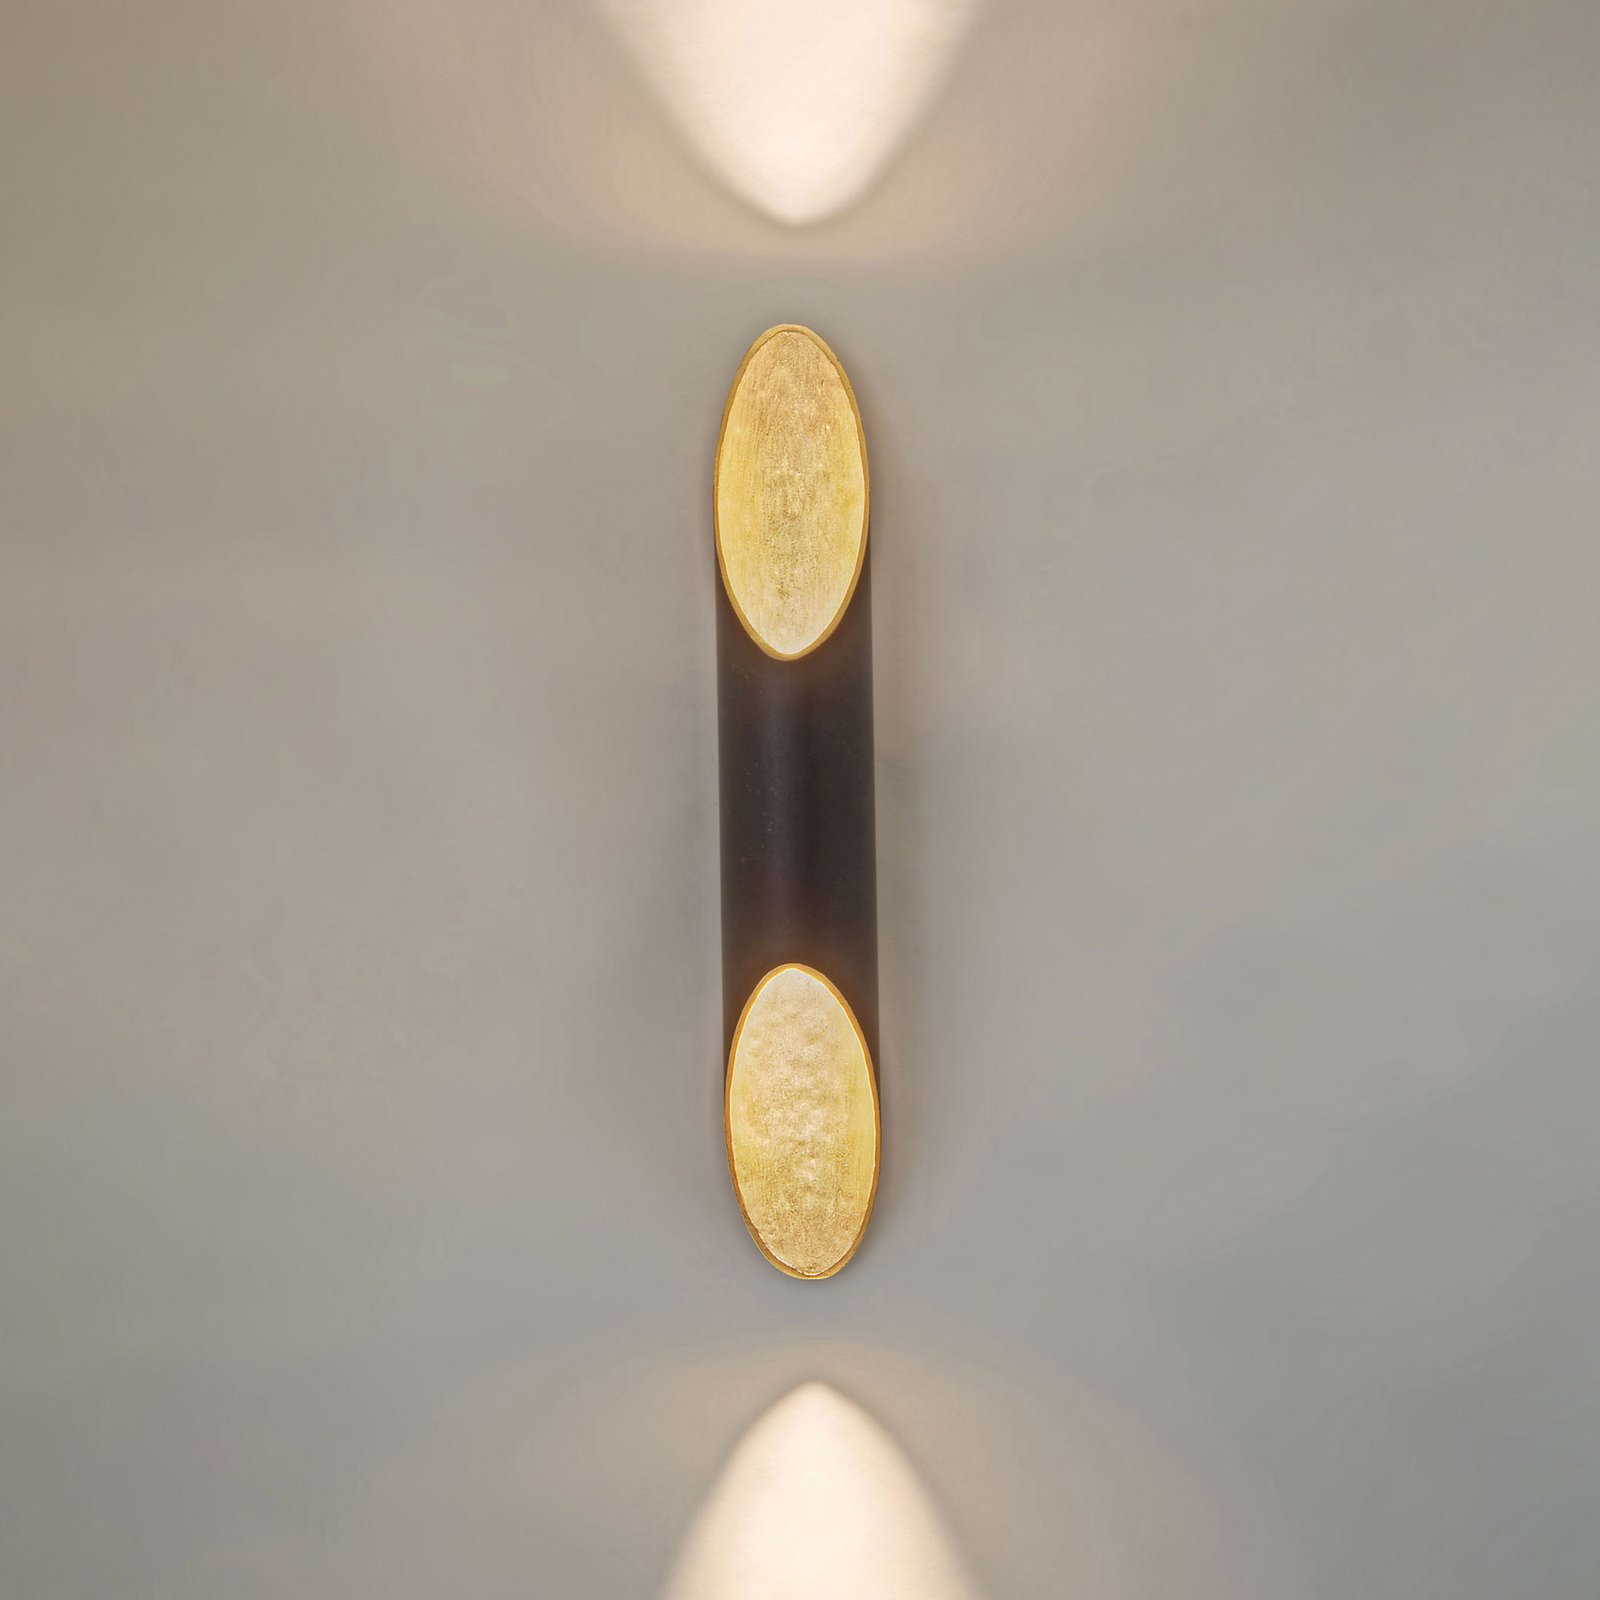 Organo wall light, height 55 cm